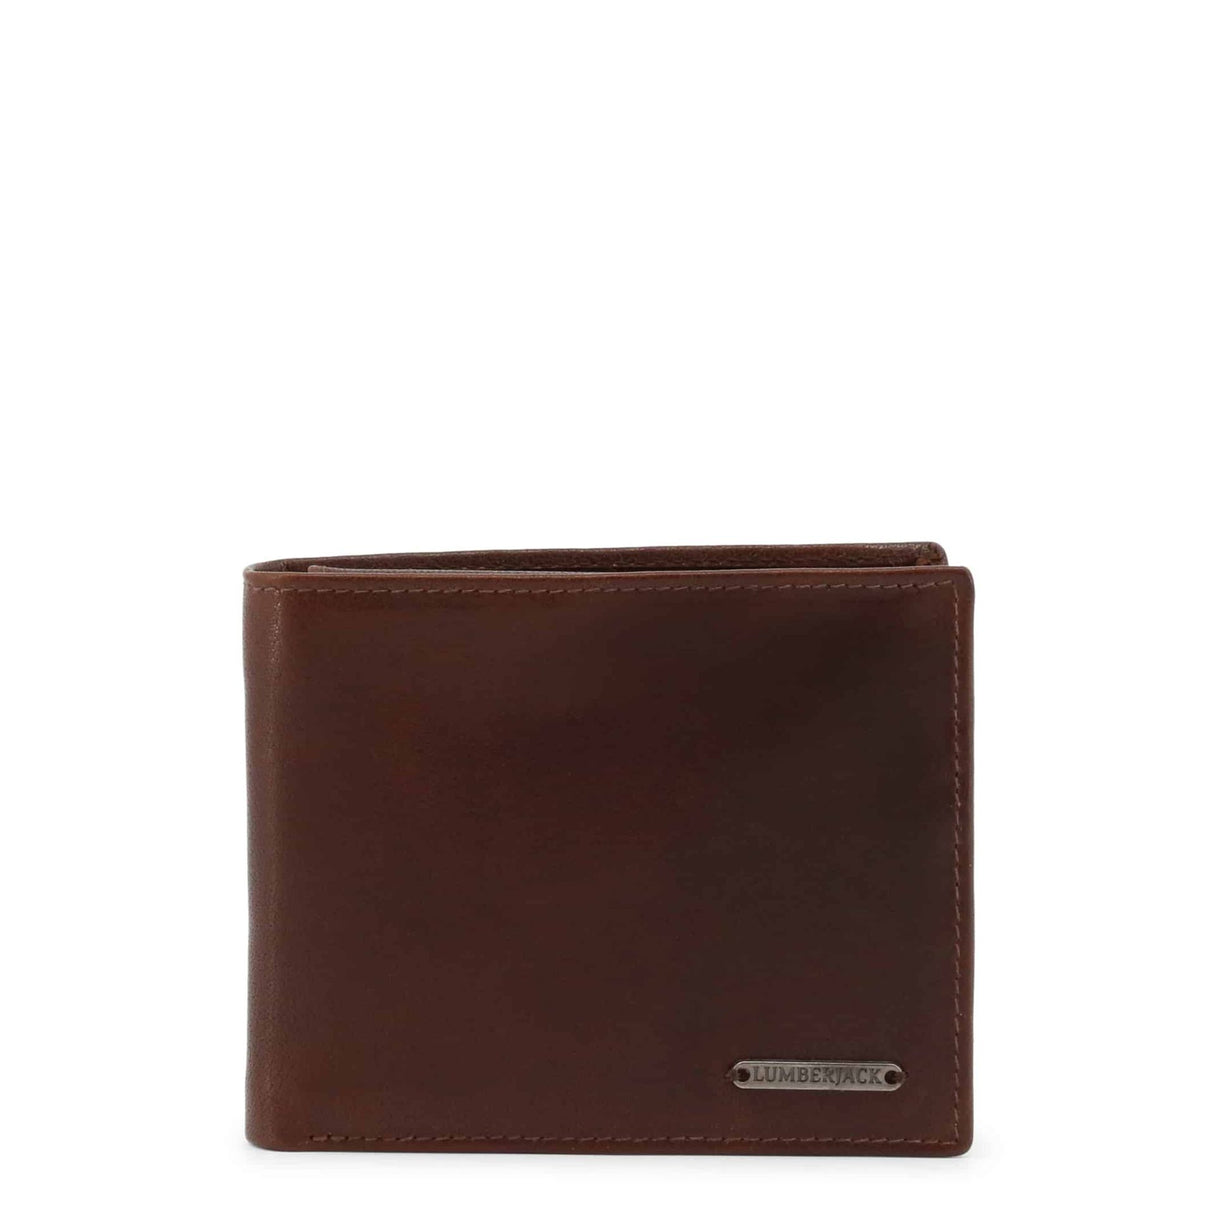 men's wallet leather wallet for men minimalist wallet for men slim wallet for men bifold wallet for men trifold wallet for men RFID blocking wallet for men front pocket wallet for men luxury men's wallet men's leather wallet